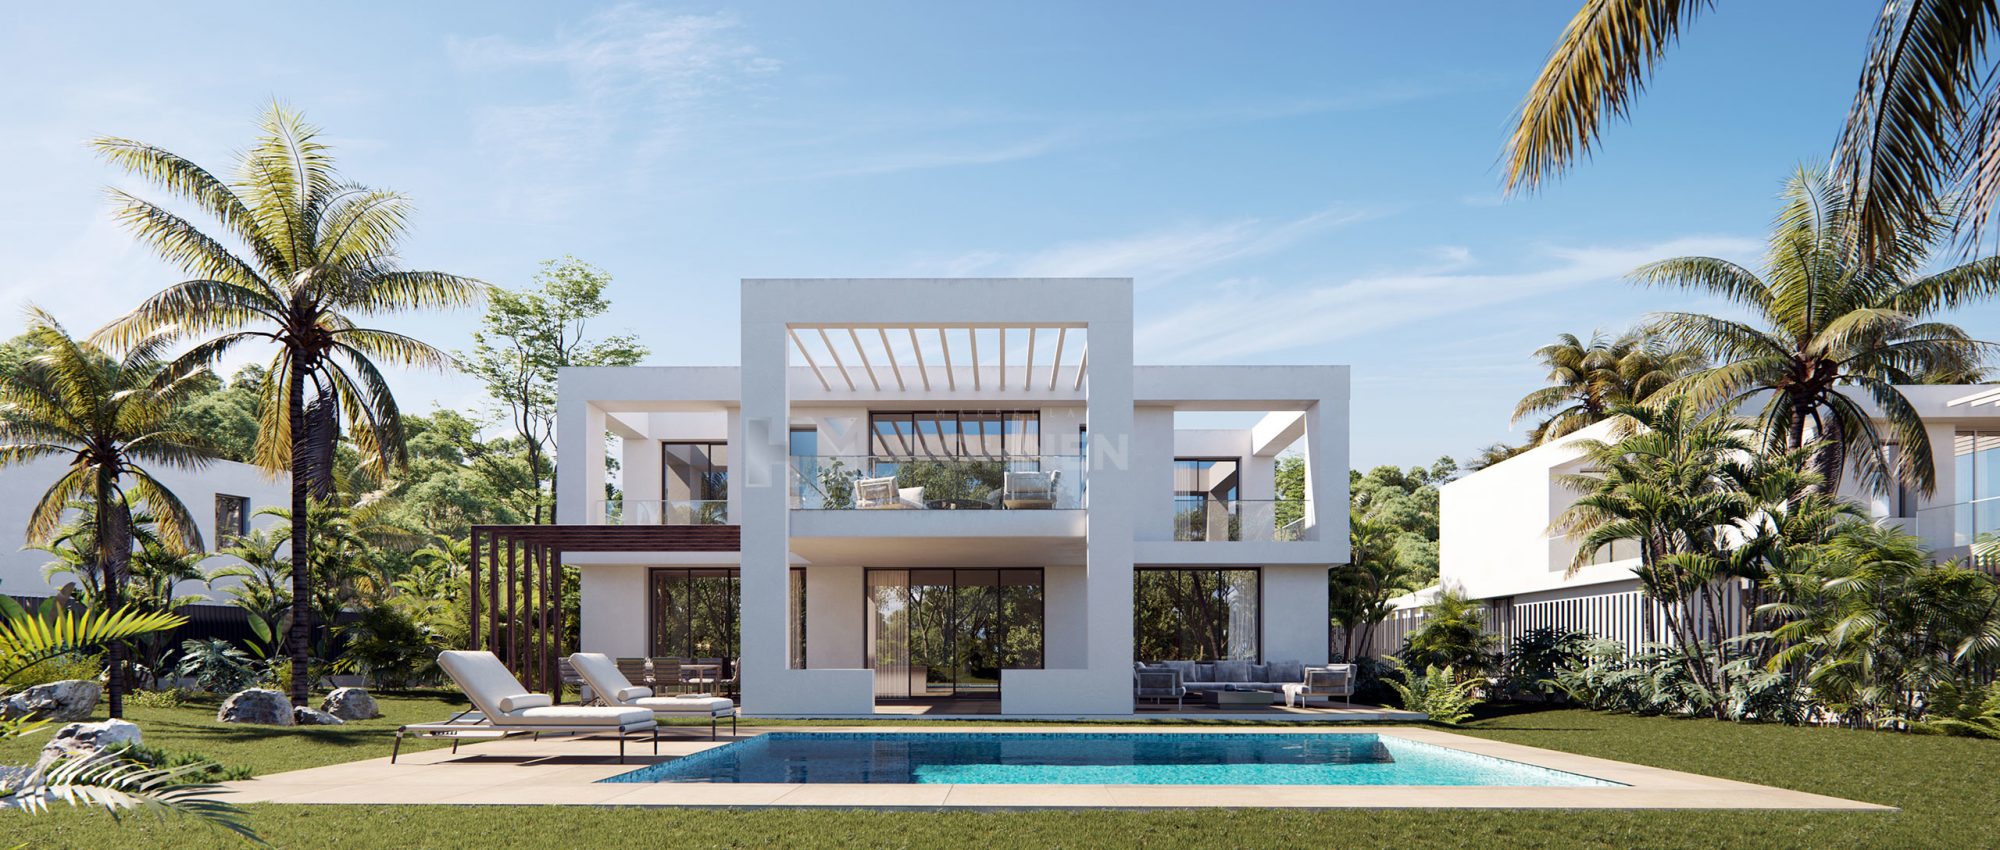 Private Collection a project of 9 boutique exclusive villas in Santa Clara, Marbella